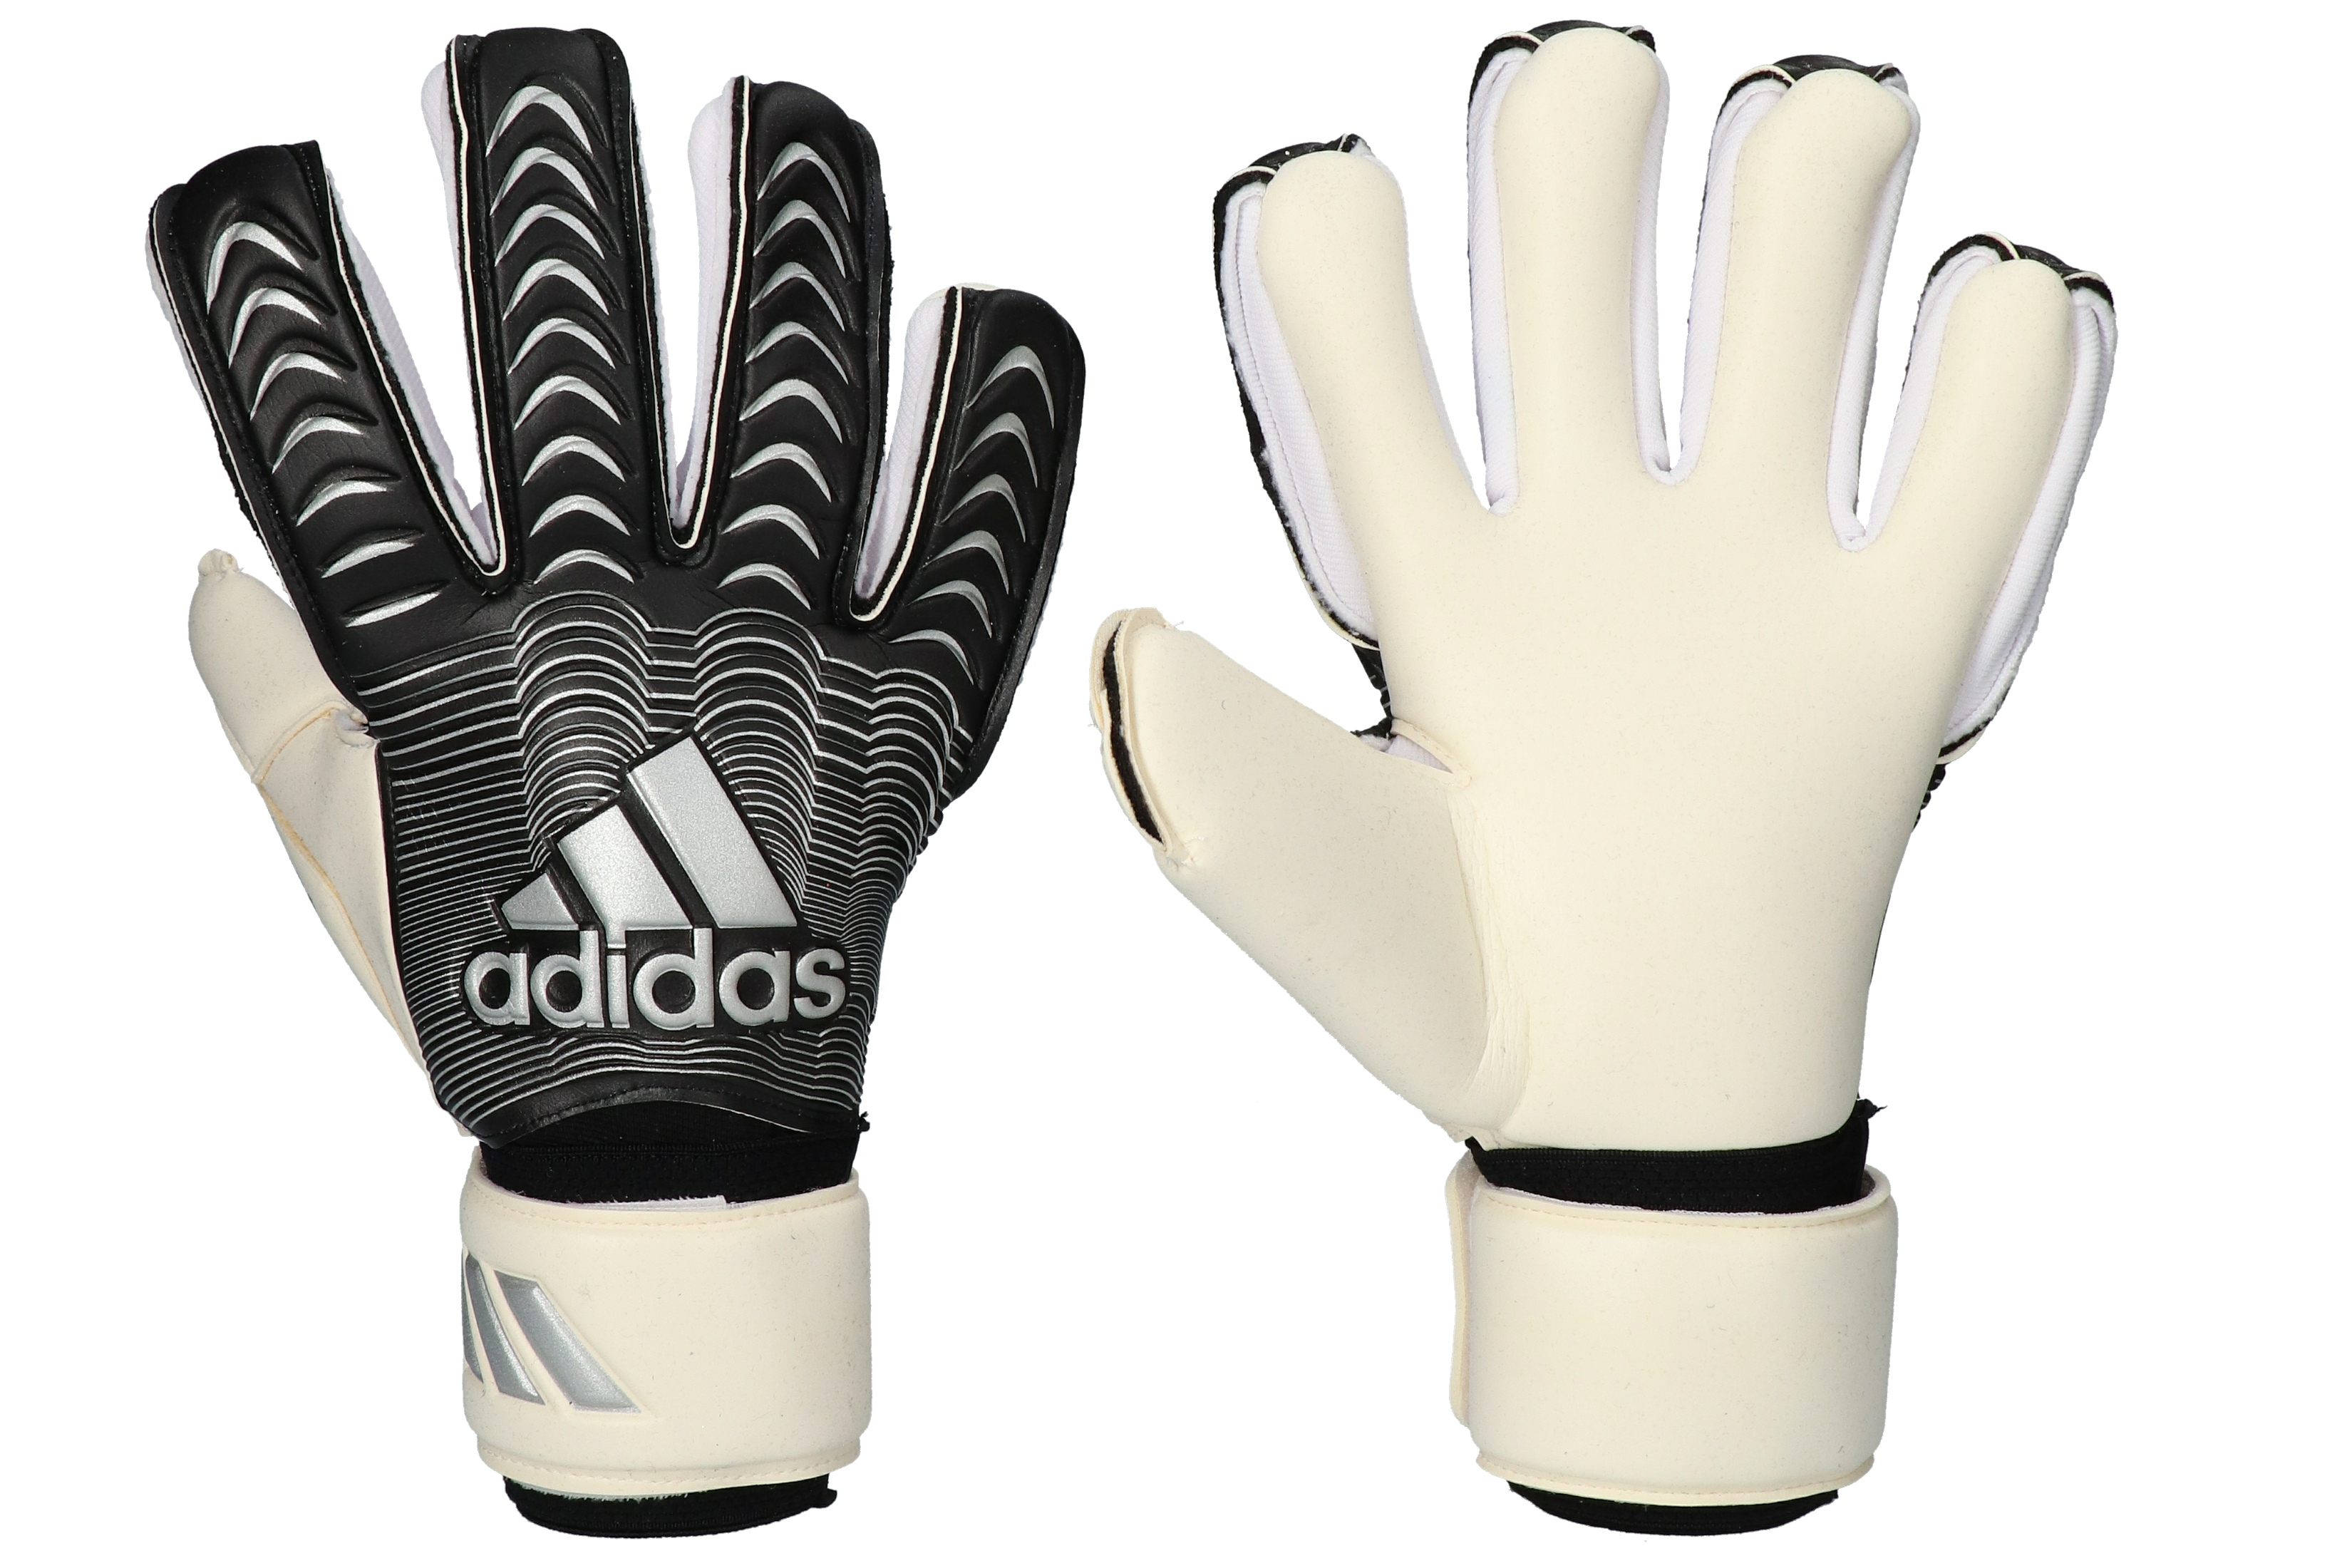 adidas classic league gloves